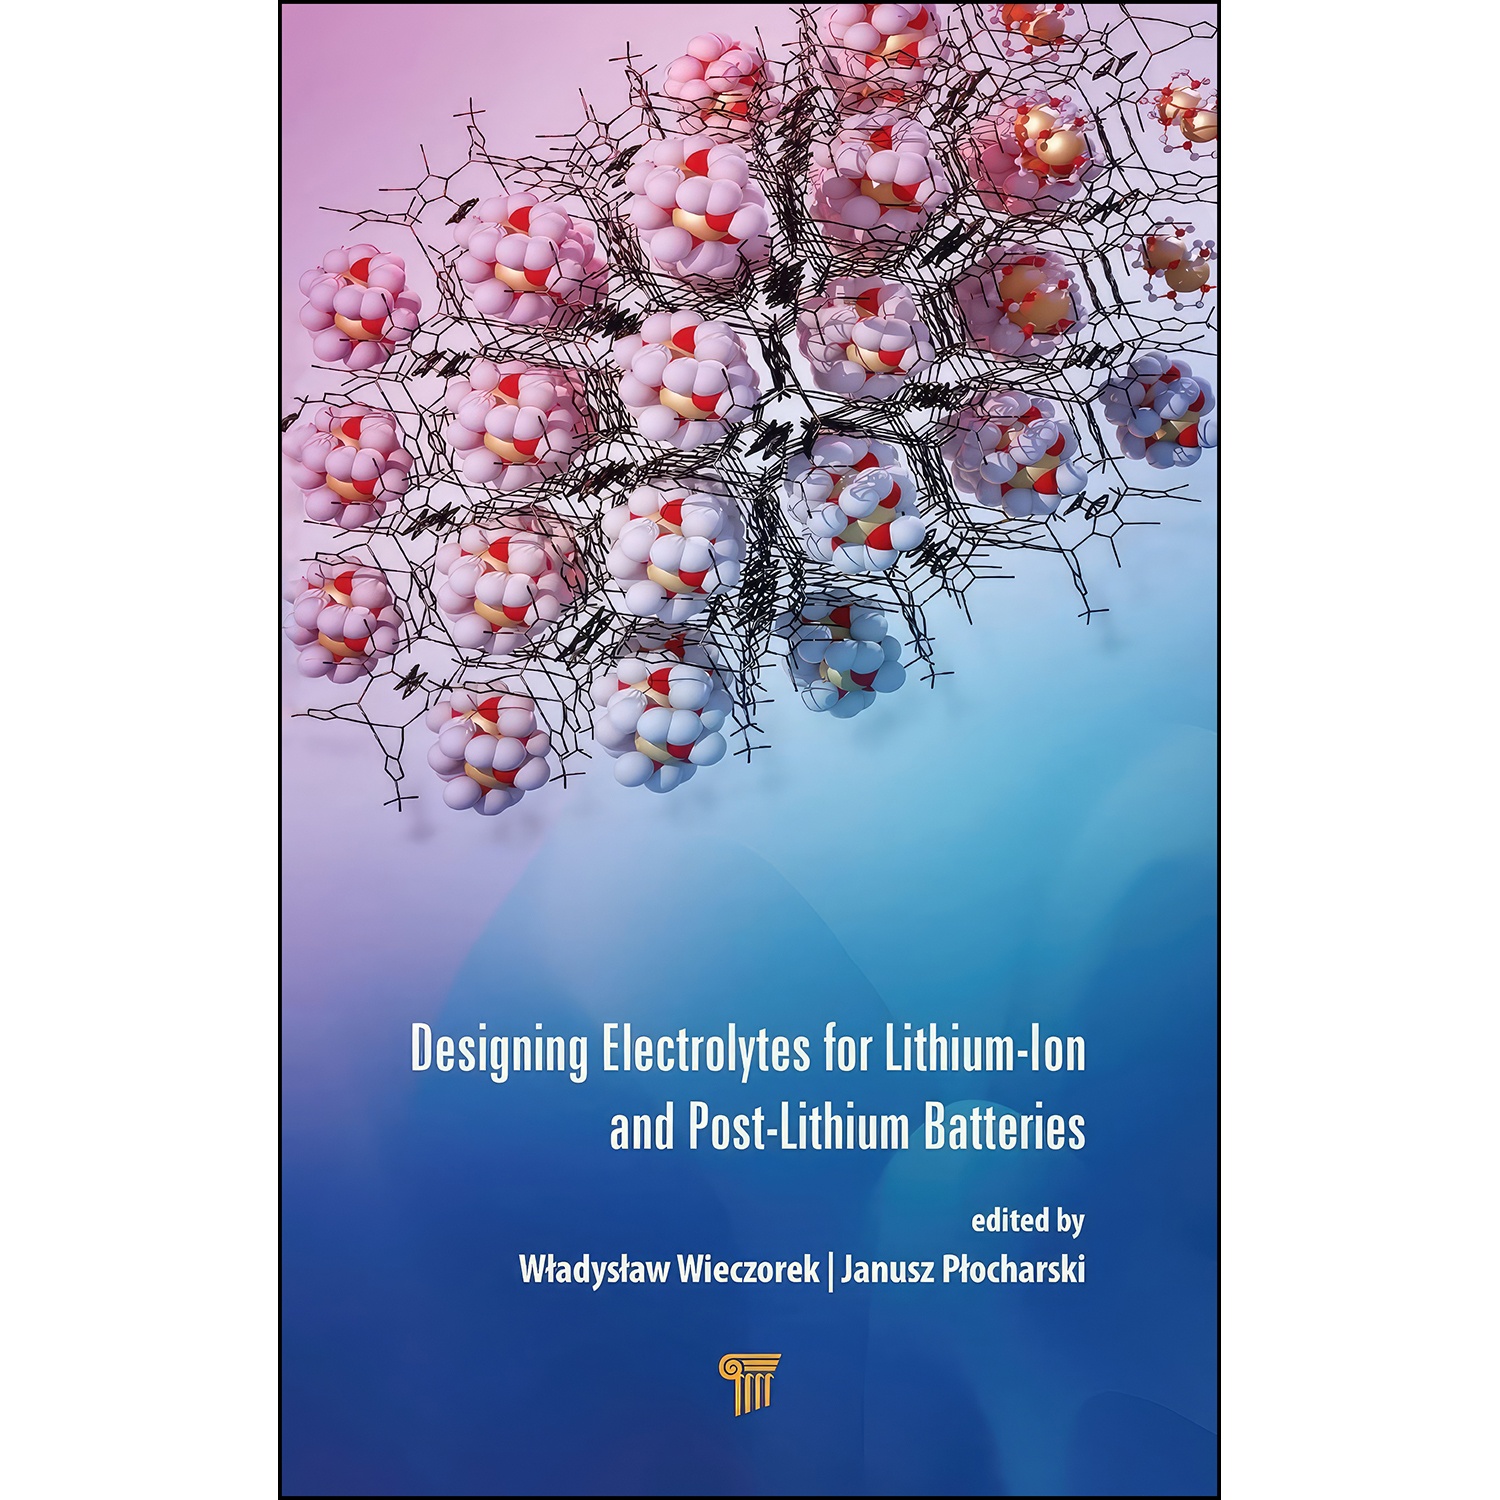 کتاب Designing Electrolytes for Lithium-Ion and Post-Lithium Batteries اثر جمعي از نويسندگان انتشارات تازه ها